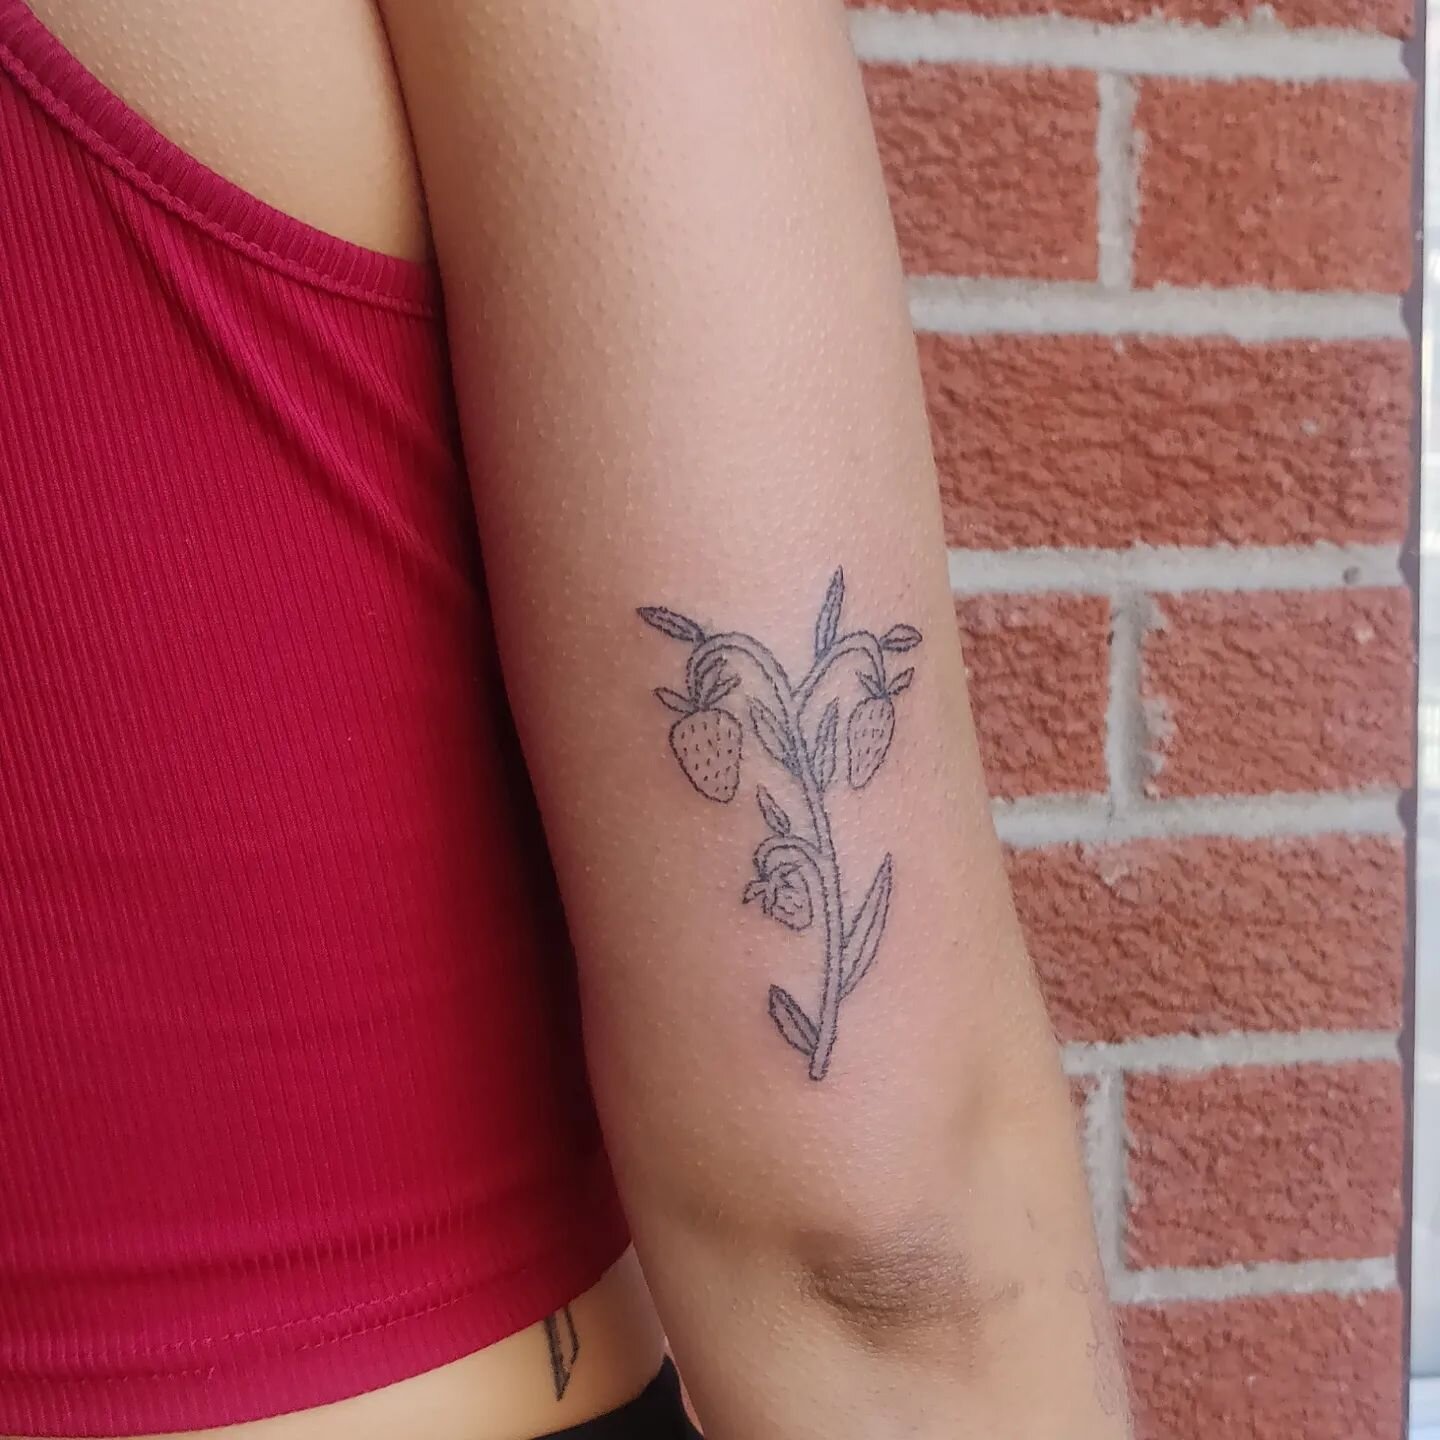 strawberry branch for @k.deleede 🍓🍓!
&bull;
&bull;
&bull;
#tattoo #tattoos #stickandpoke #stickandpoketattoo #handpoke #handpoketattoo #tattooartist #tattooed #ink #inked #montrealtattooartist #montrealtattooartist #montrealtattoo #babytattooer